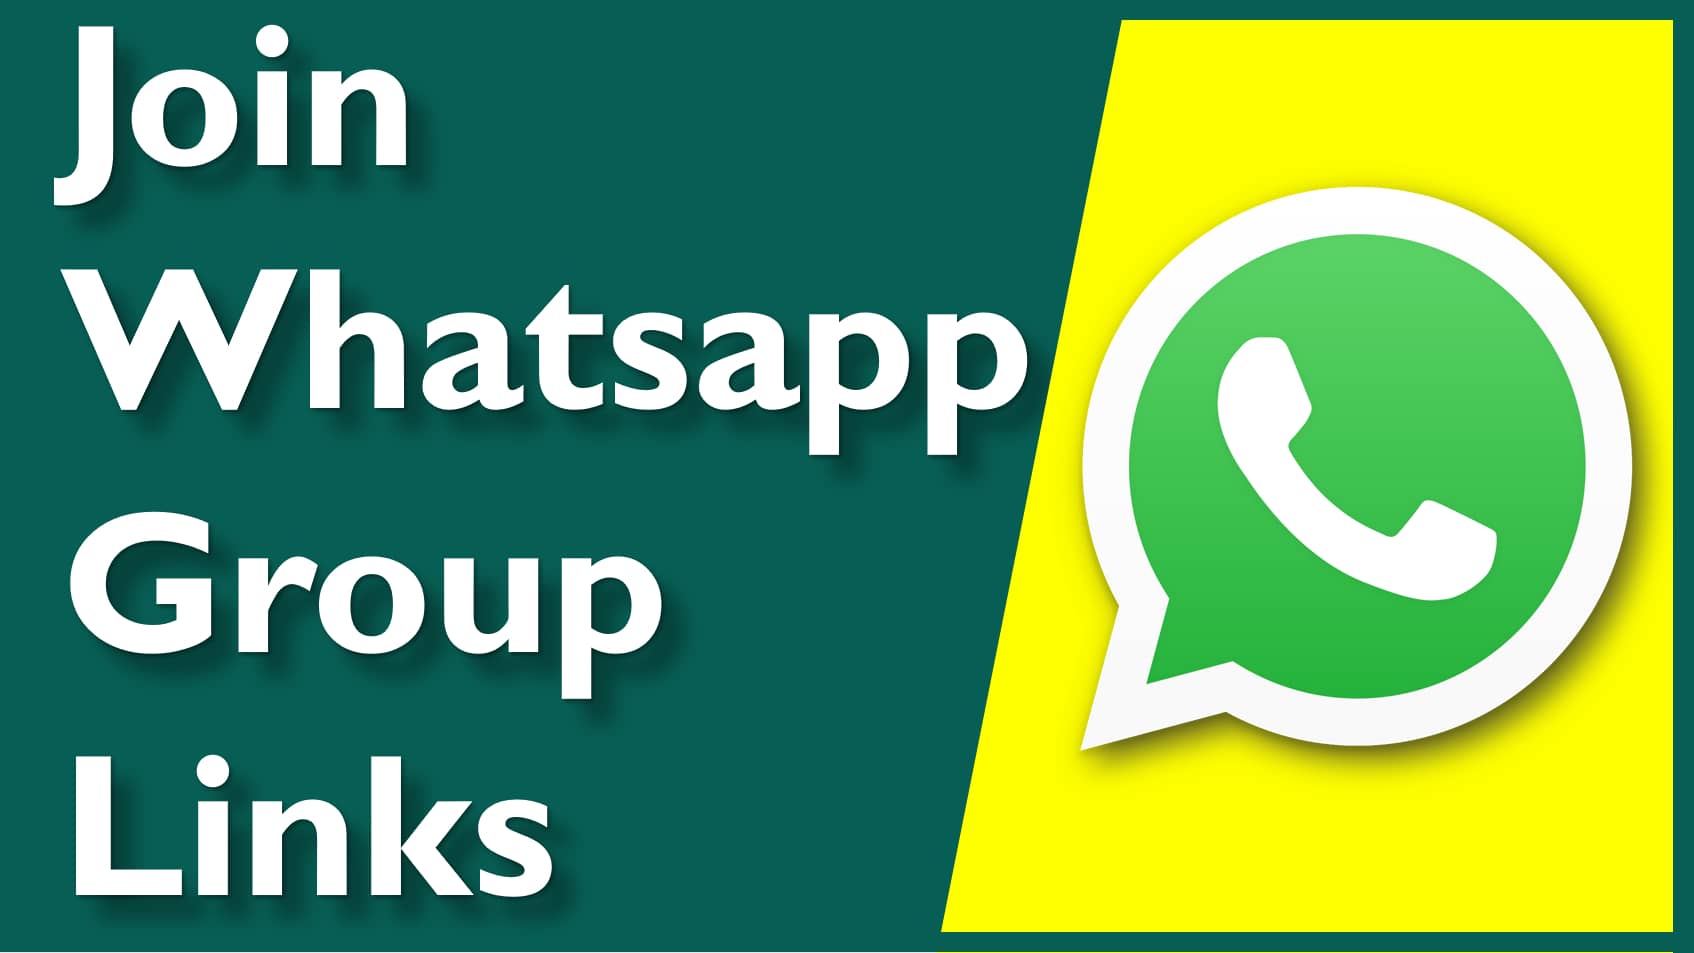 Groupe whatsapp sexe